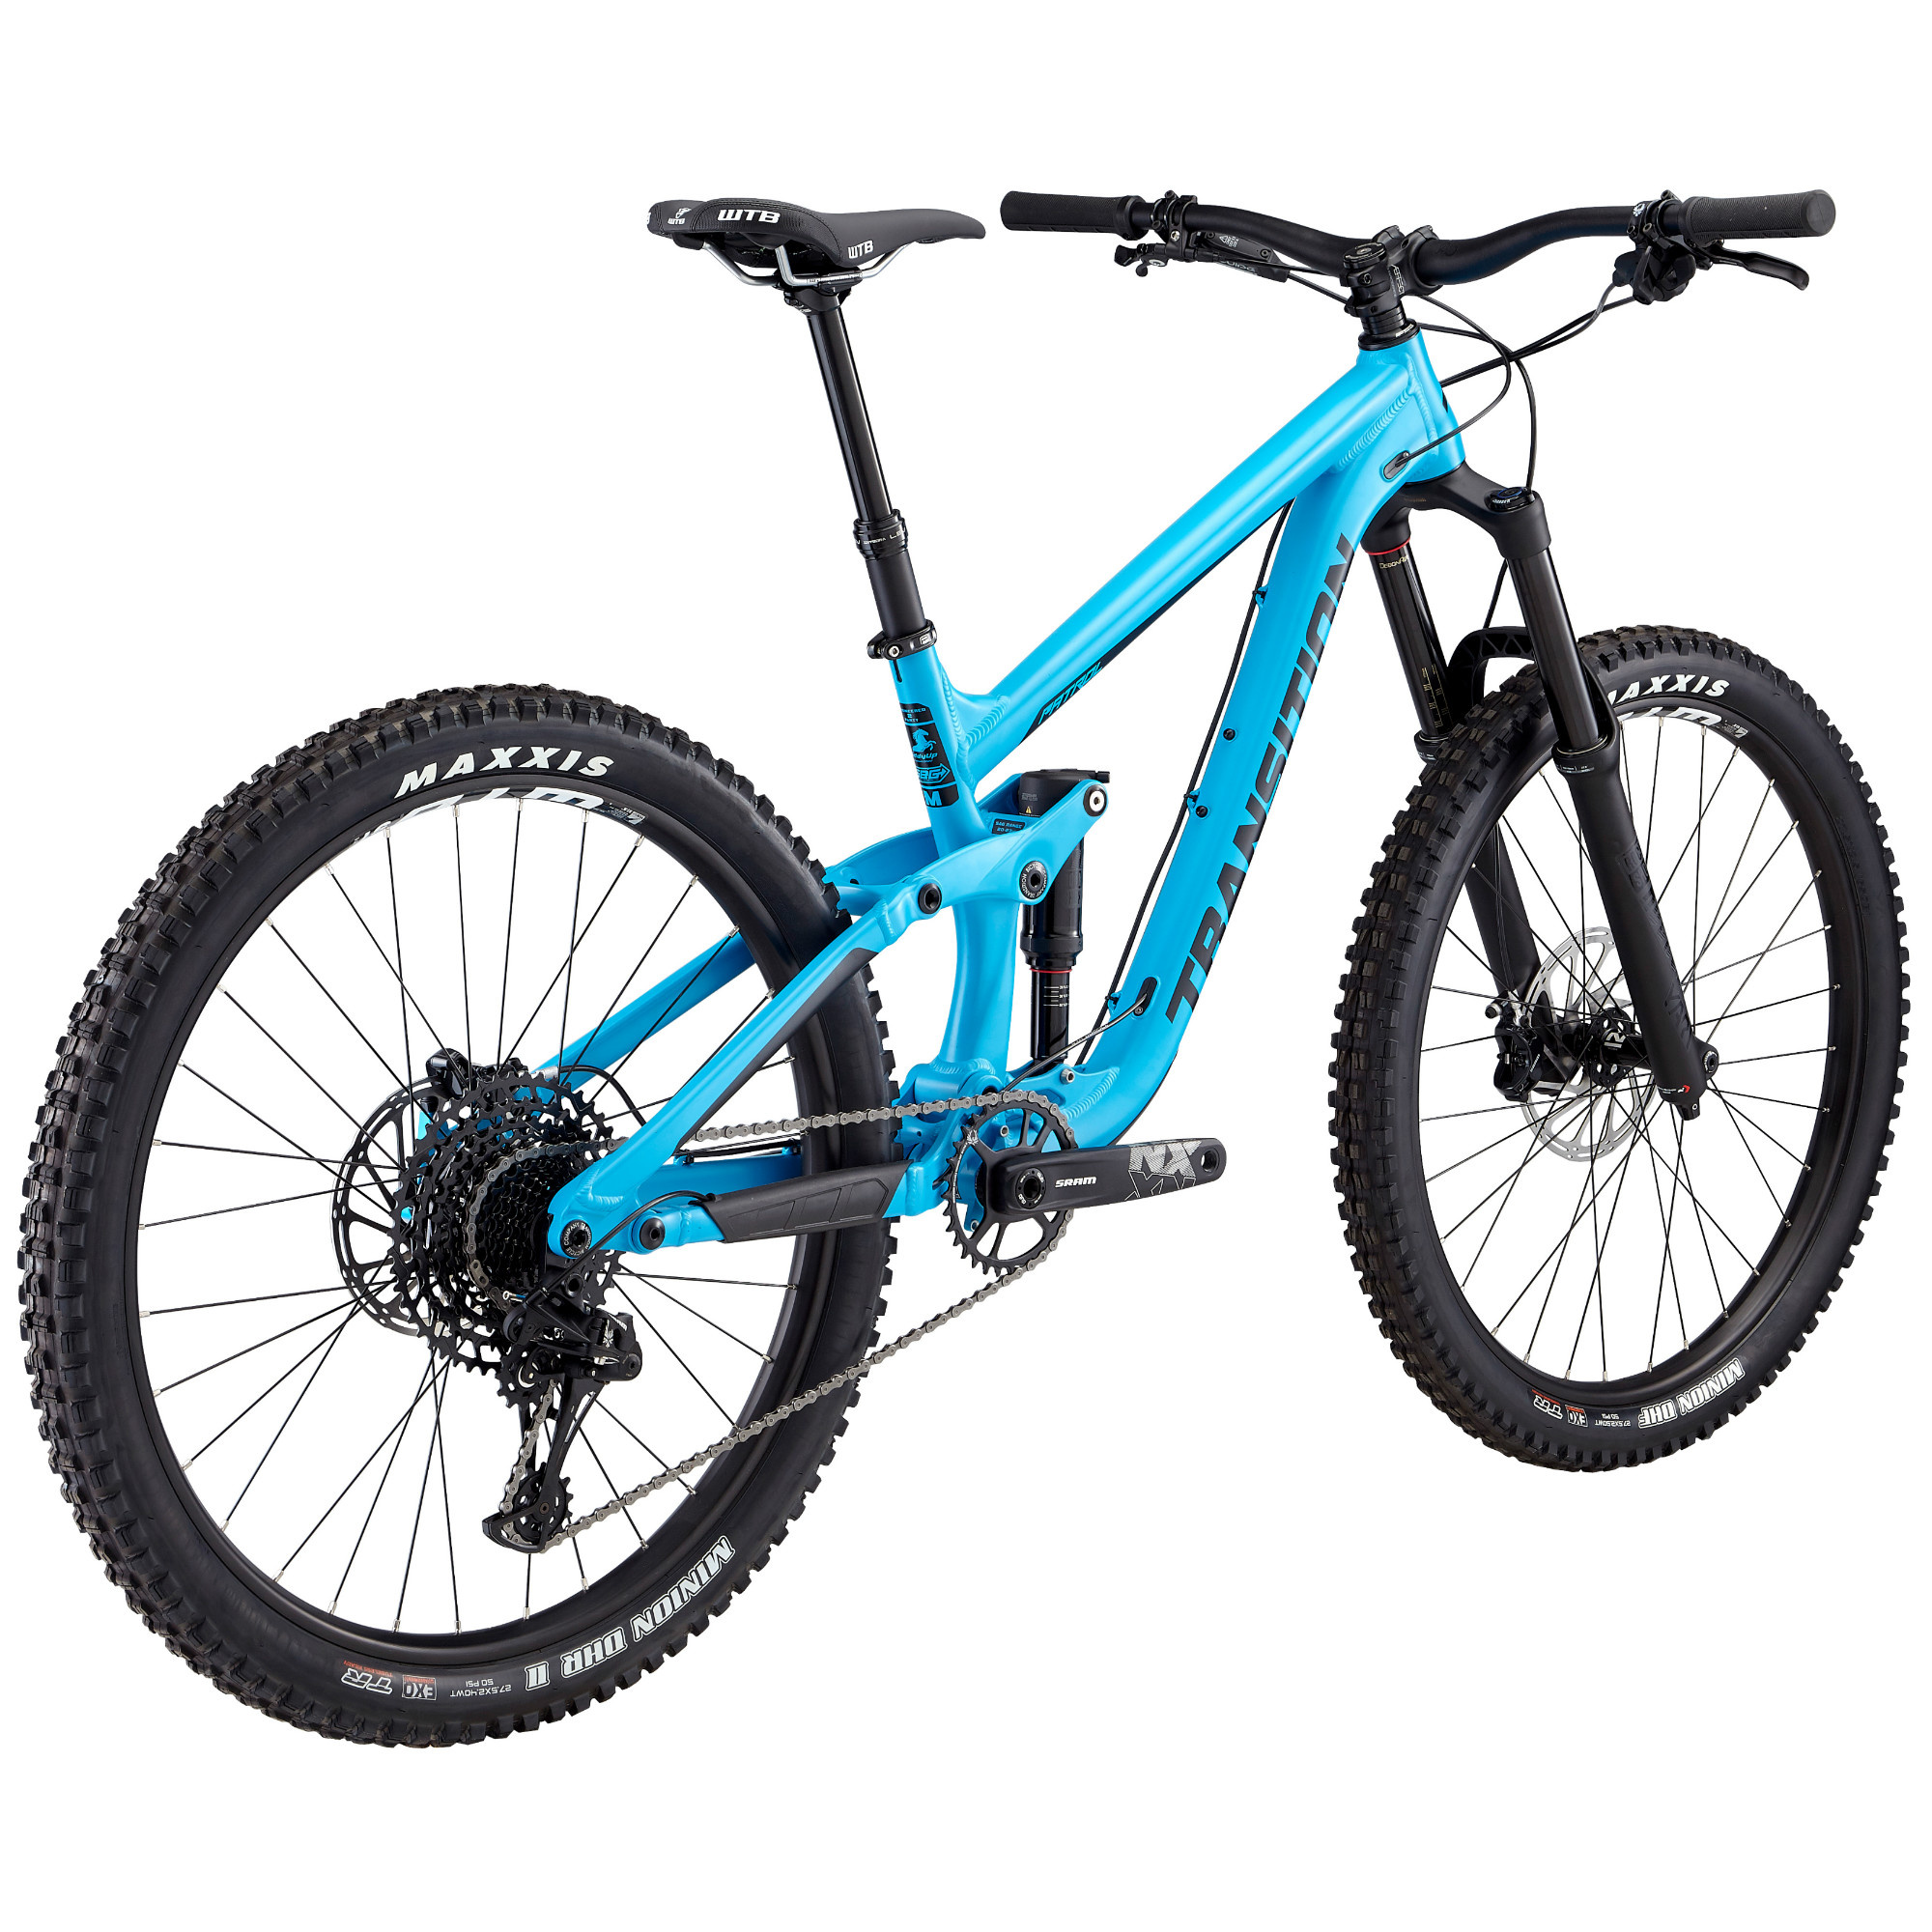 Transition Bikes, On sale: Patrol NX 2019, 60% off, Limited stock, 2000x2000 HD Handy